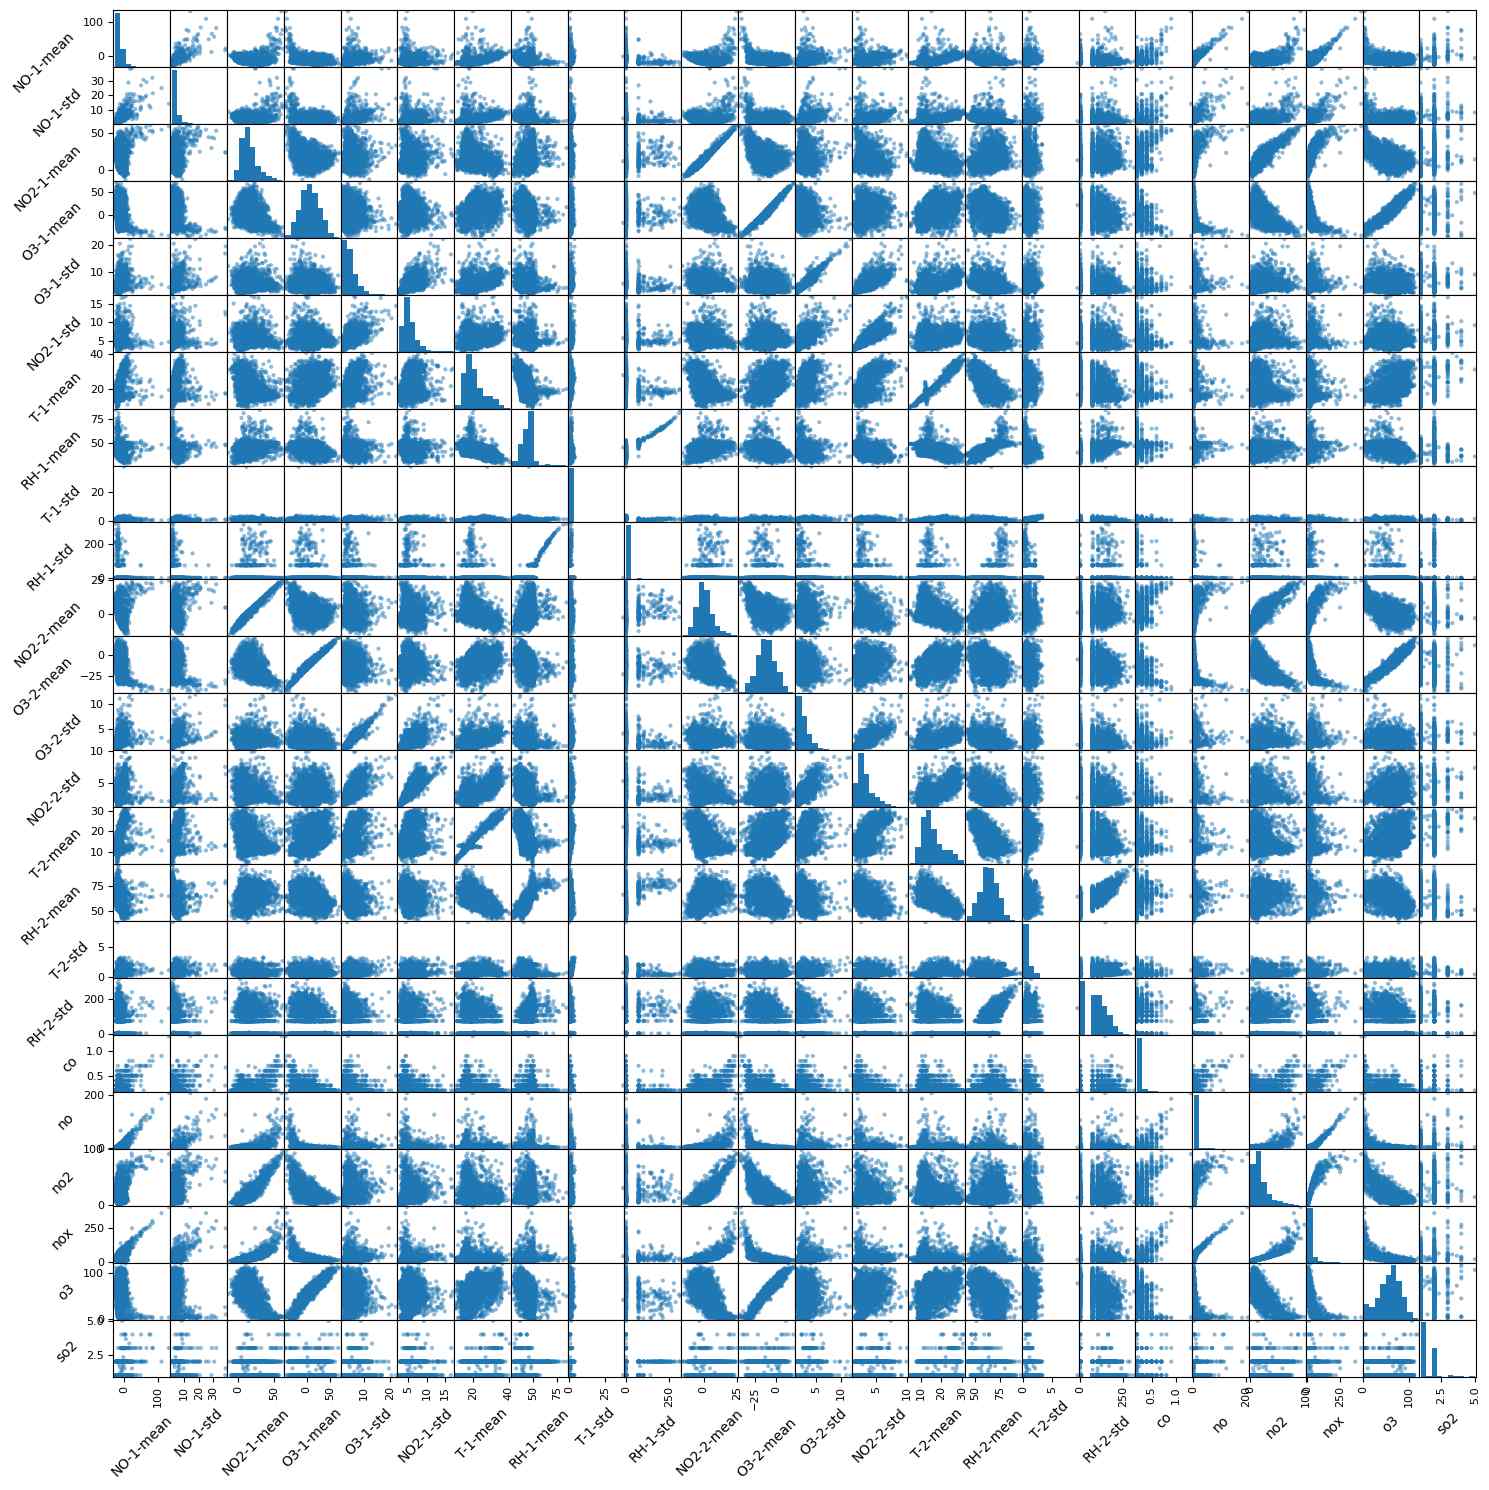 Scatter matrix visualizing correlations among sensors and target analytes.